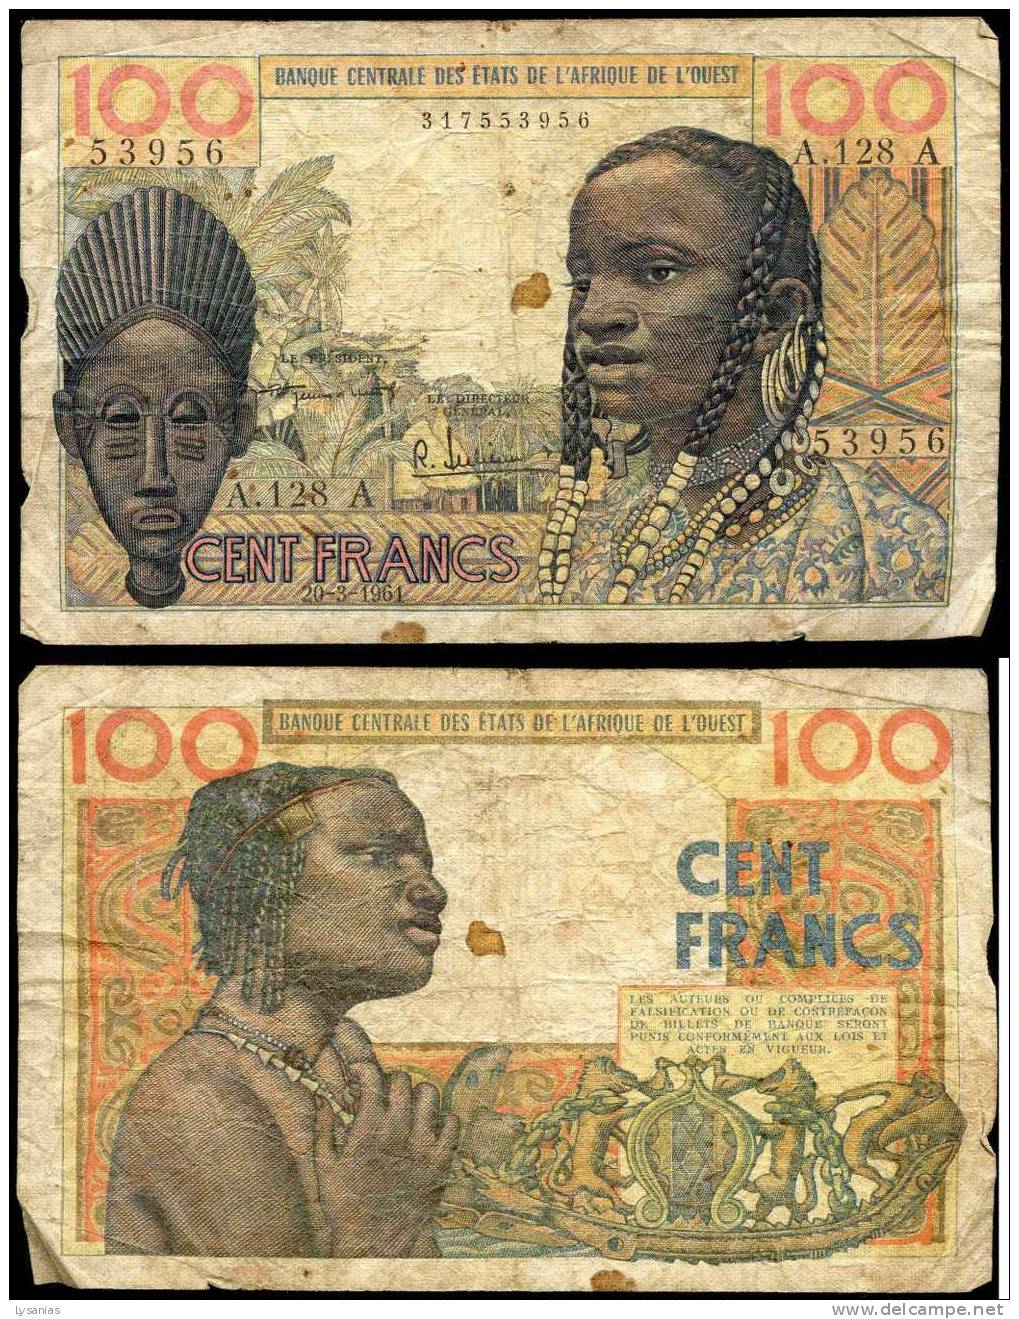 100F BCEAO, 20/3/1961, A128A 317553956 - Other - Africa